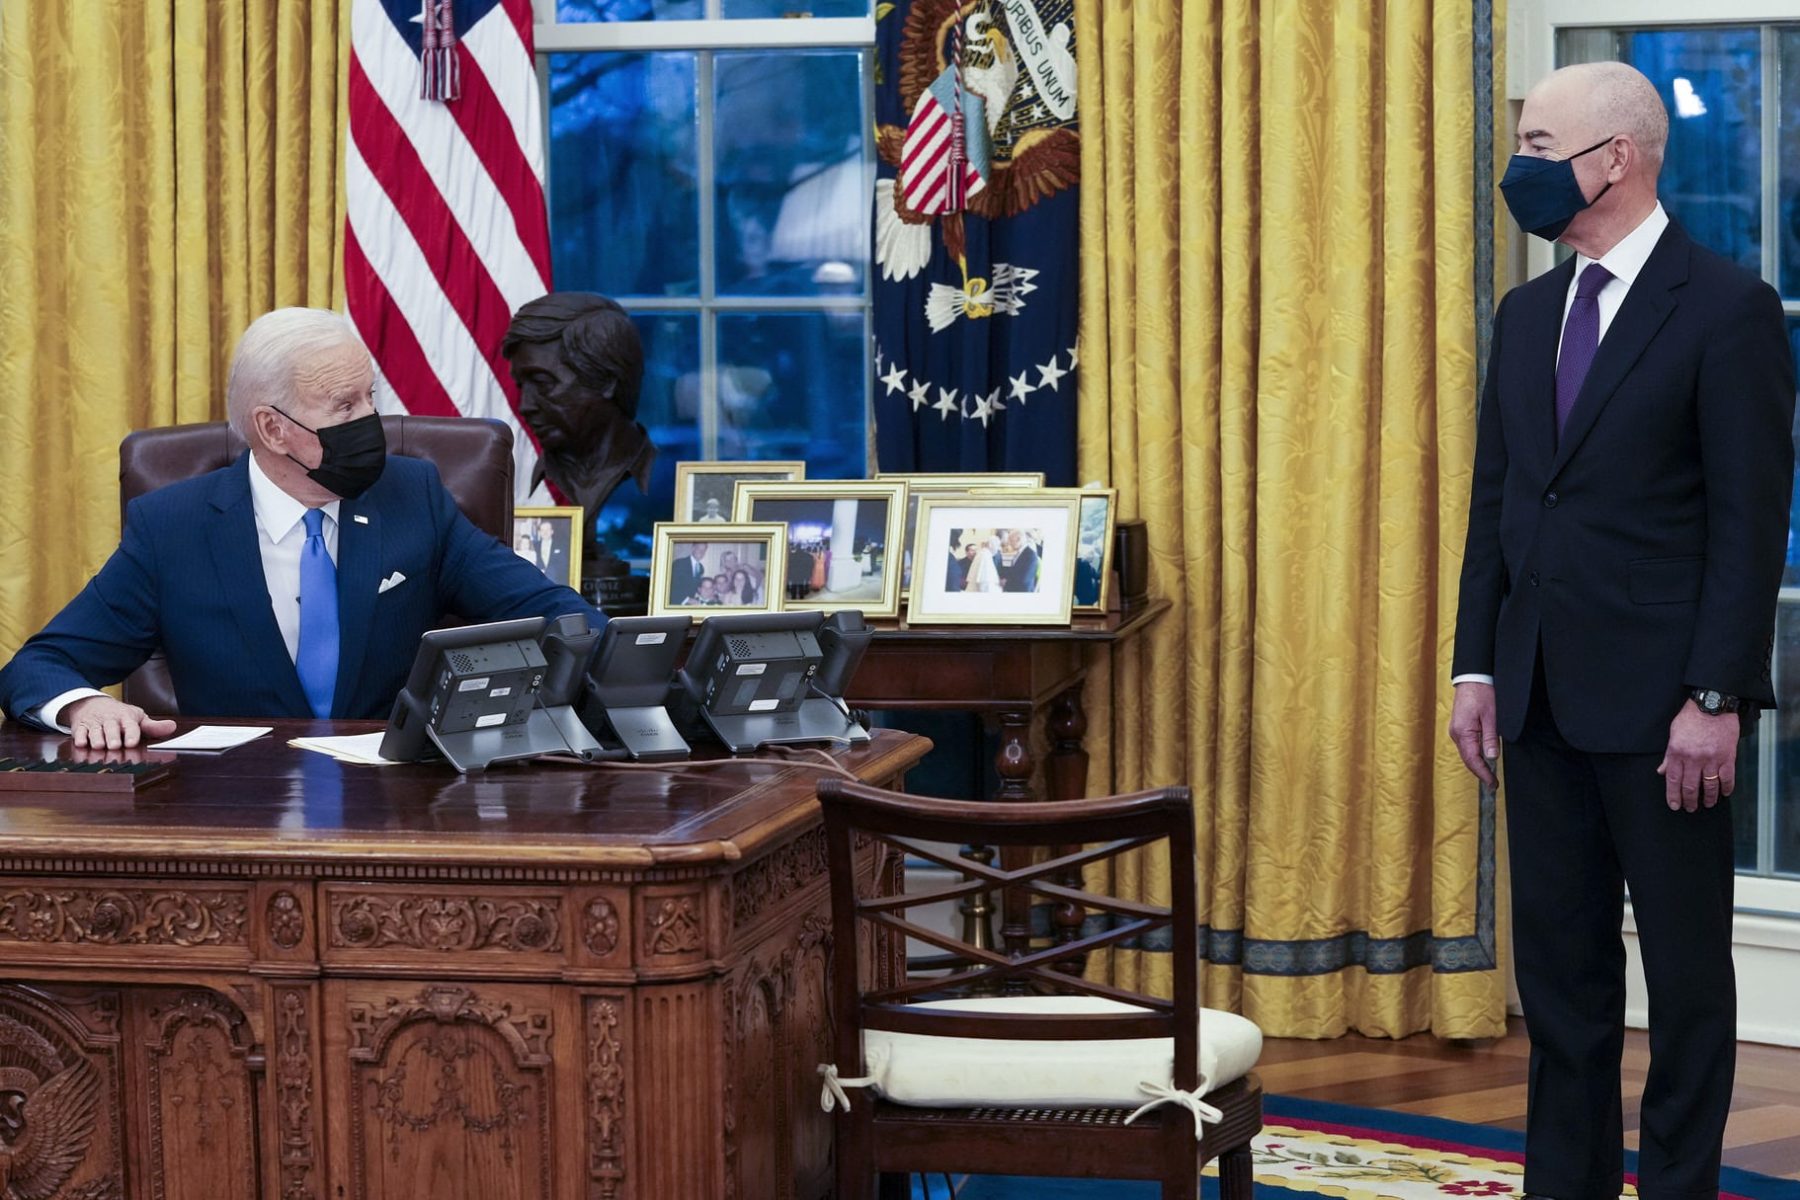 Biden speaks to DHS Secretary Mayorkas in the Oval Office